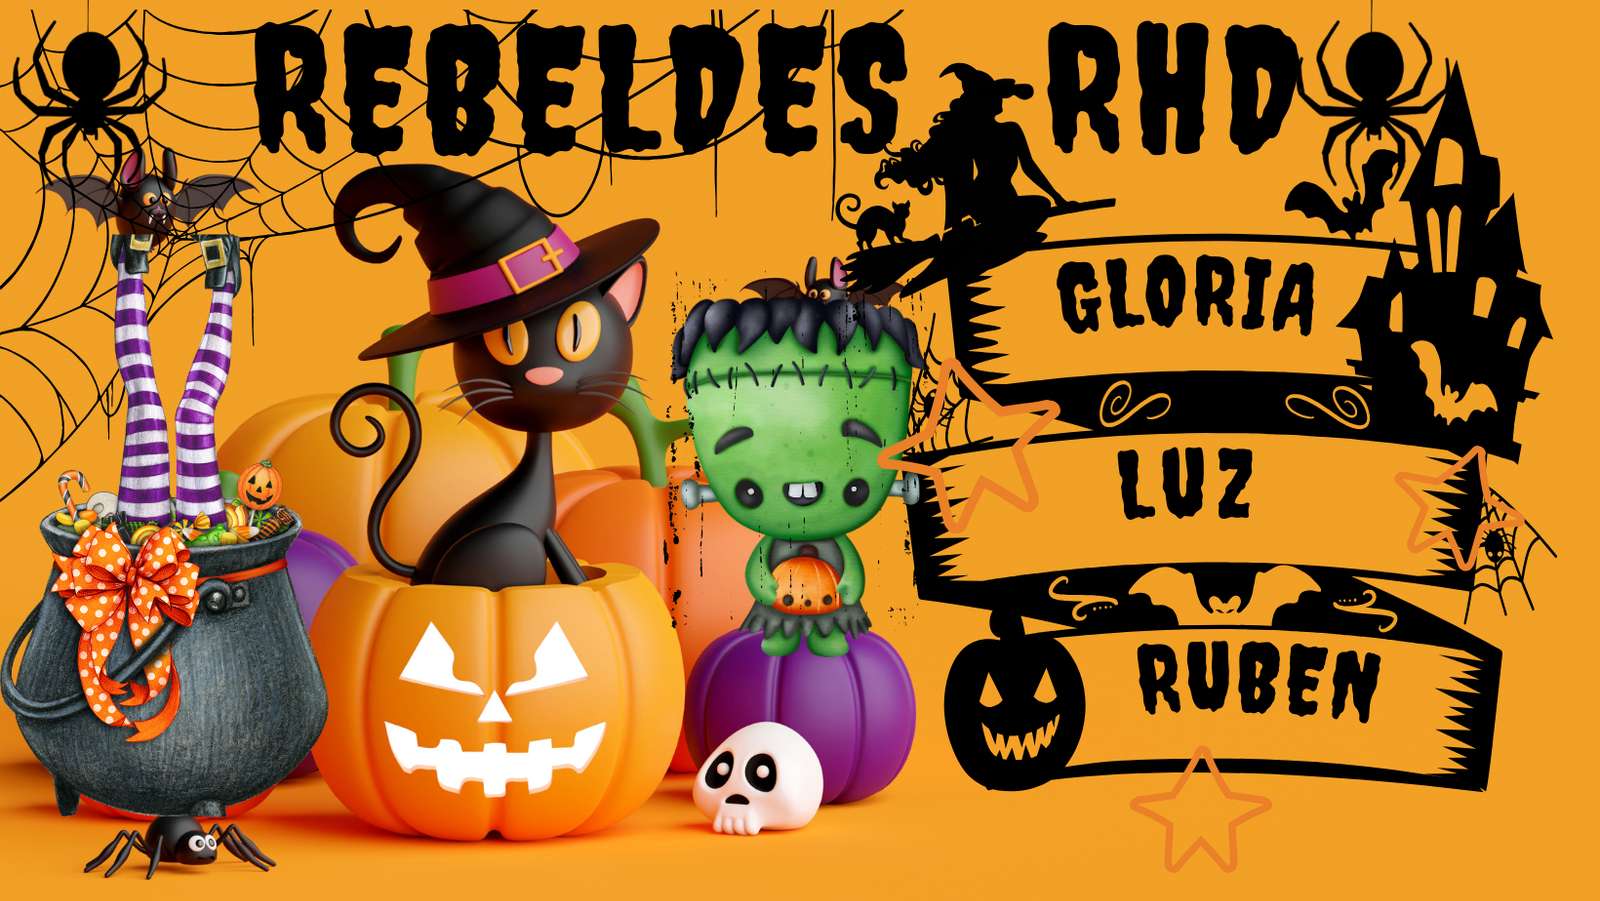 Rebeli-RHD jigsaw puzzle online